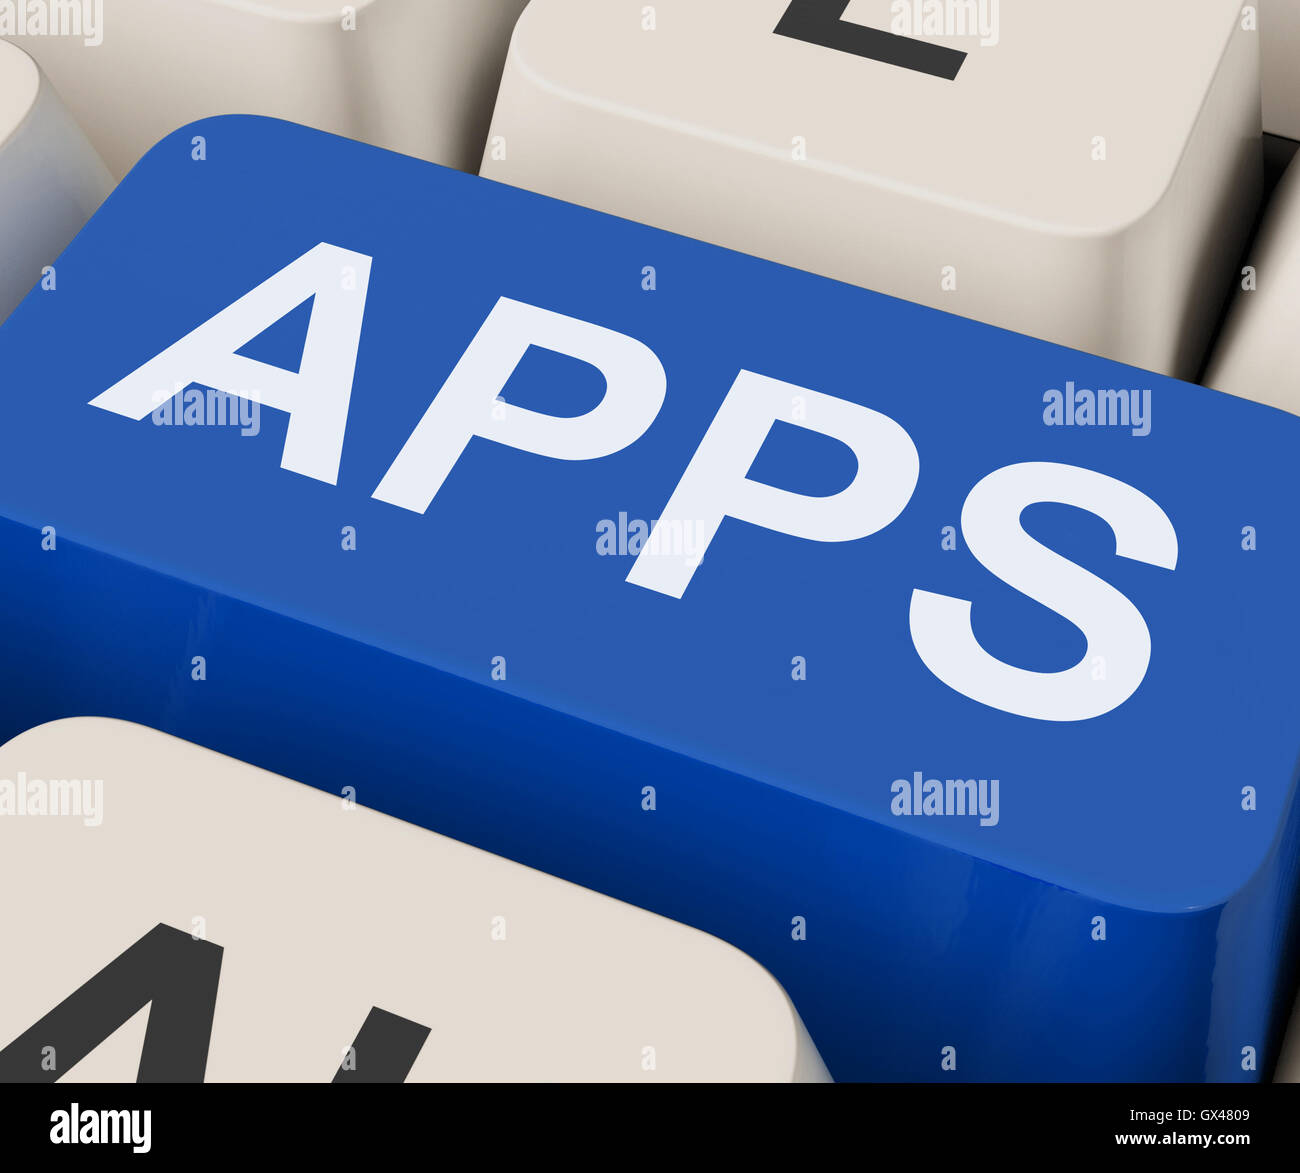 Apps Keys Shows Internet Application Or App Stock Photo